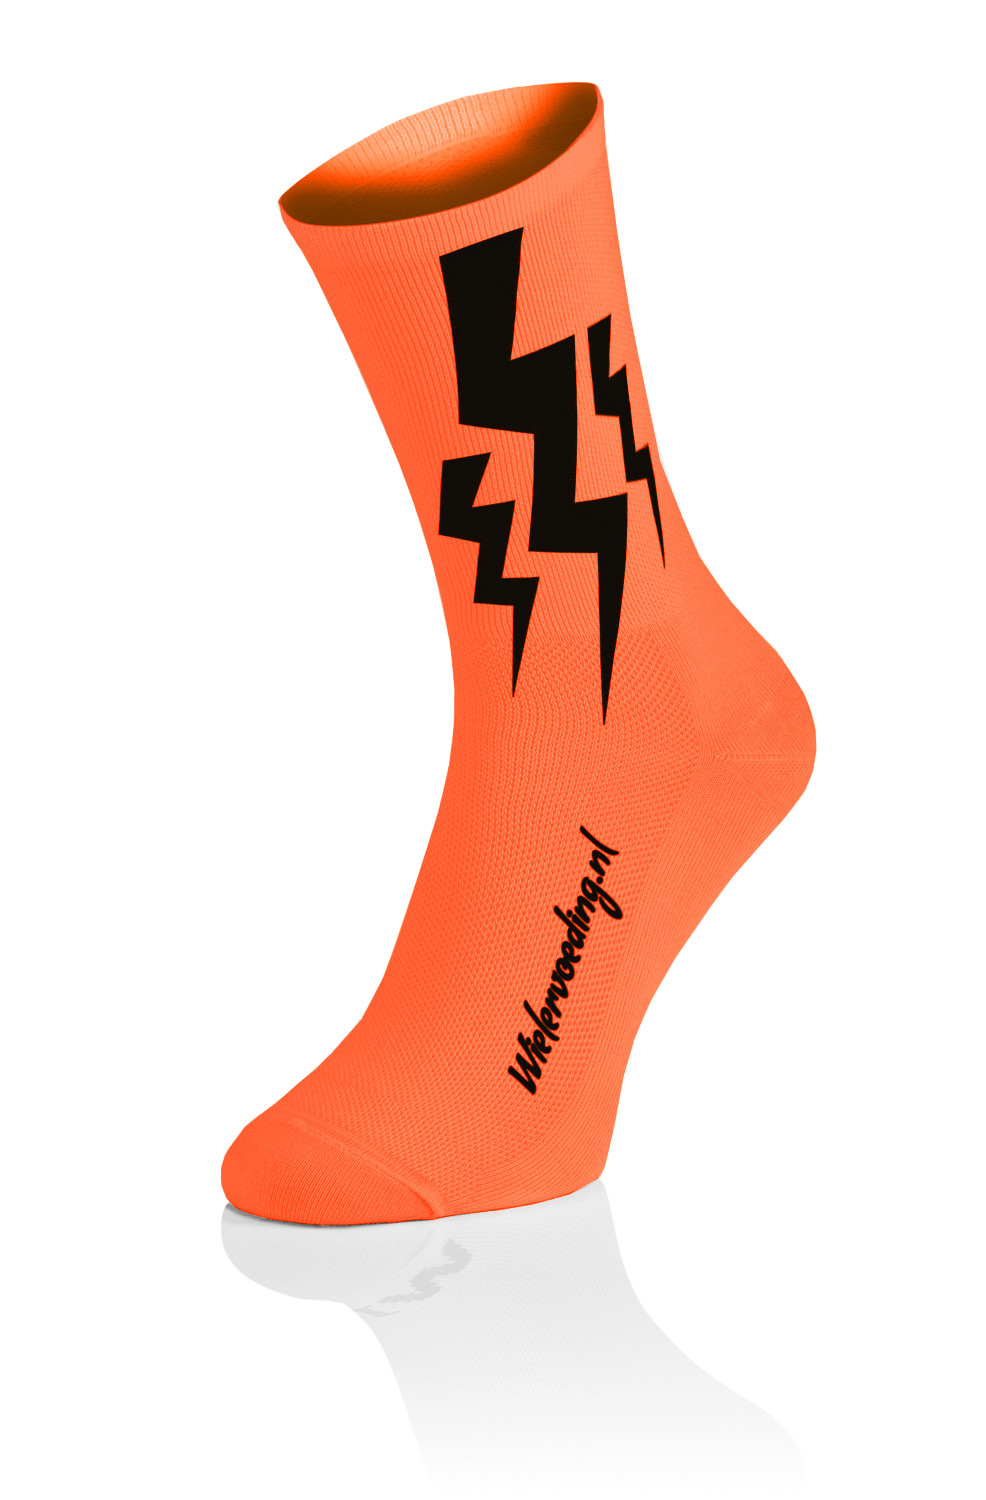 naar voren gebracht Romanschrijver Dekking Lightning Socks - Fluo Oranje - Lightning Socks - Fietssokken - Sokken -  Kleding - Accessoires - sportvoeding op Wielervoeding.nl